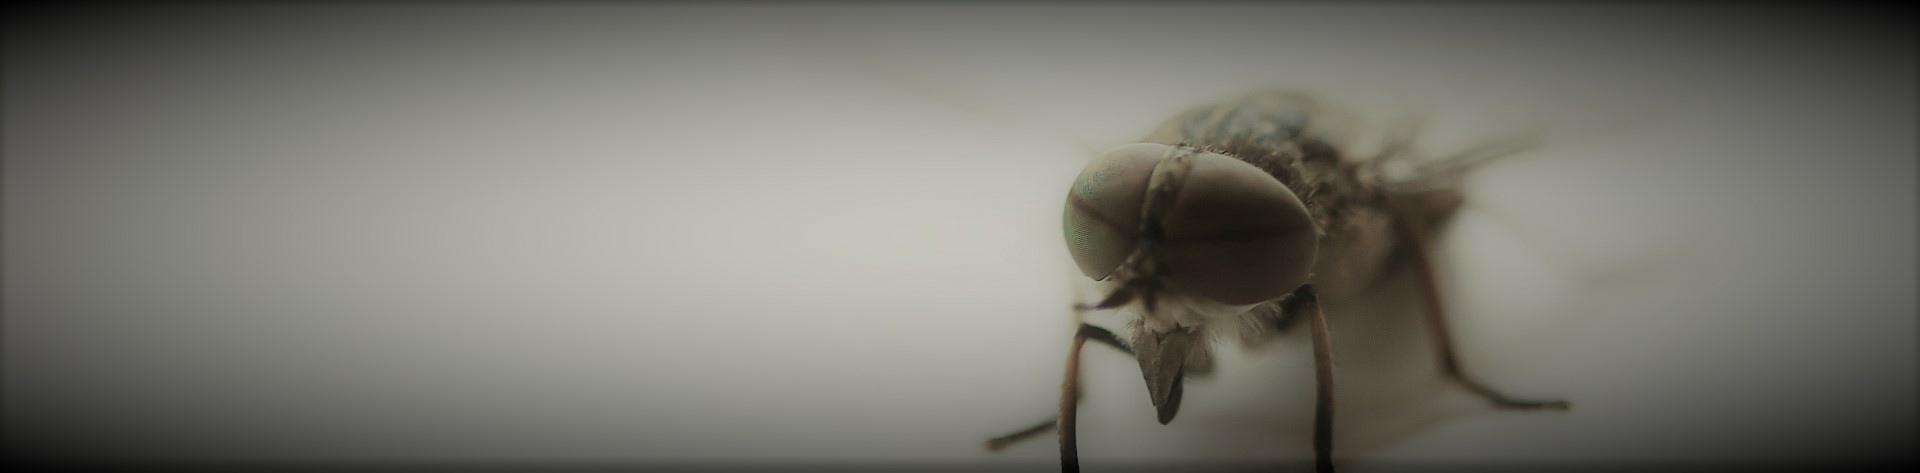 Pestbgone Buckinghamshire Housefly